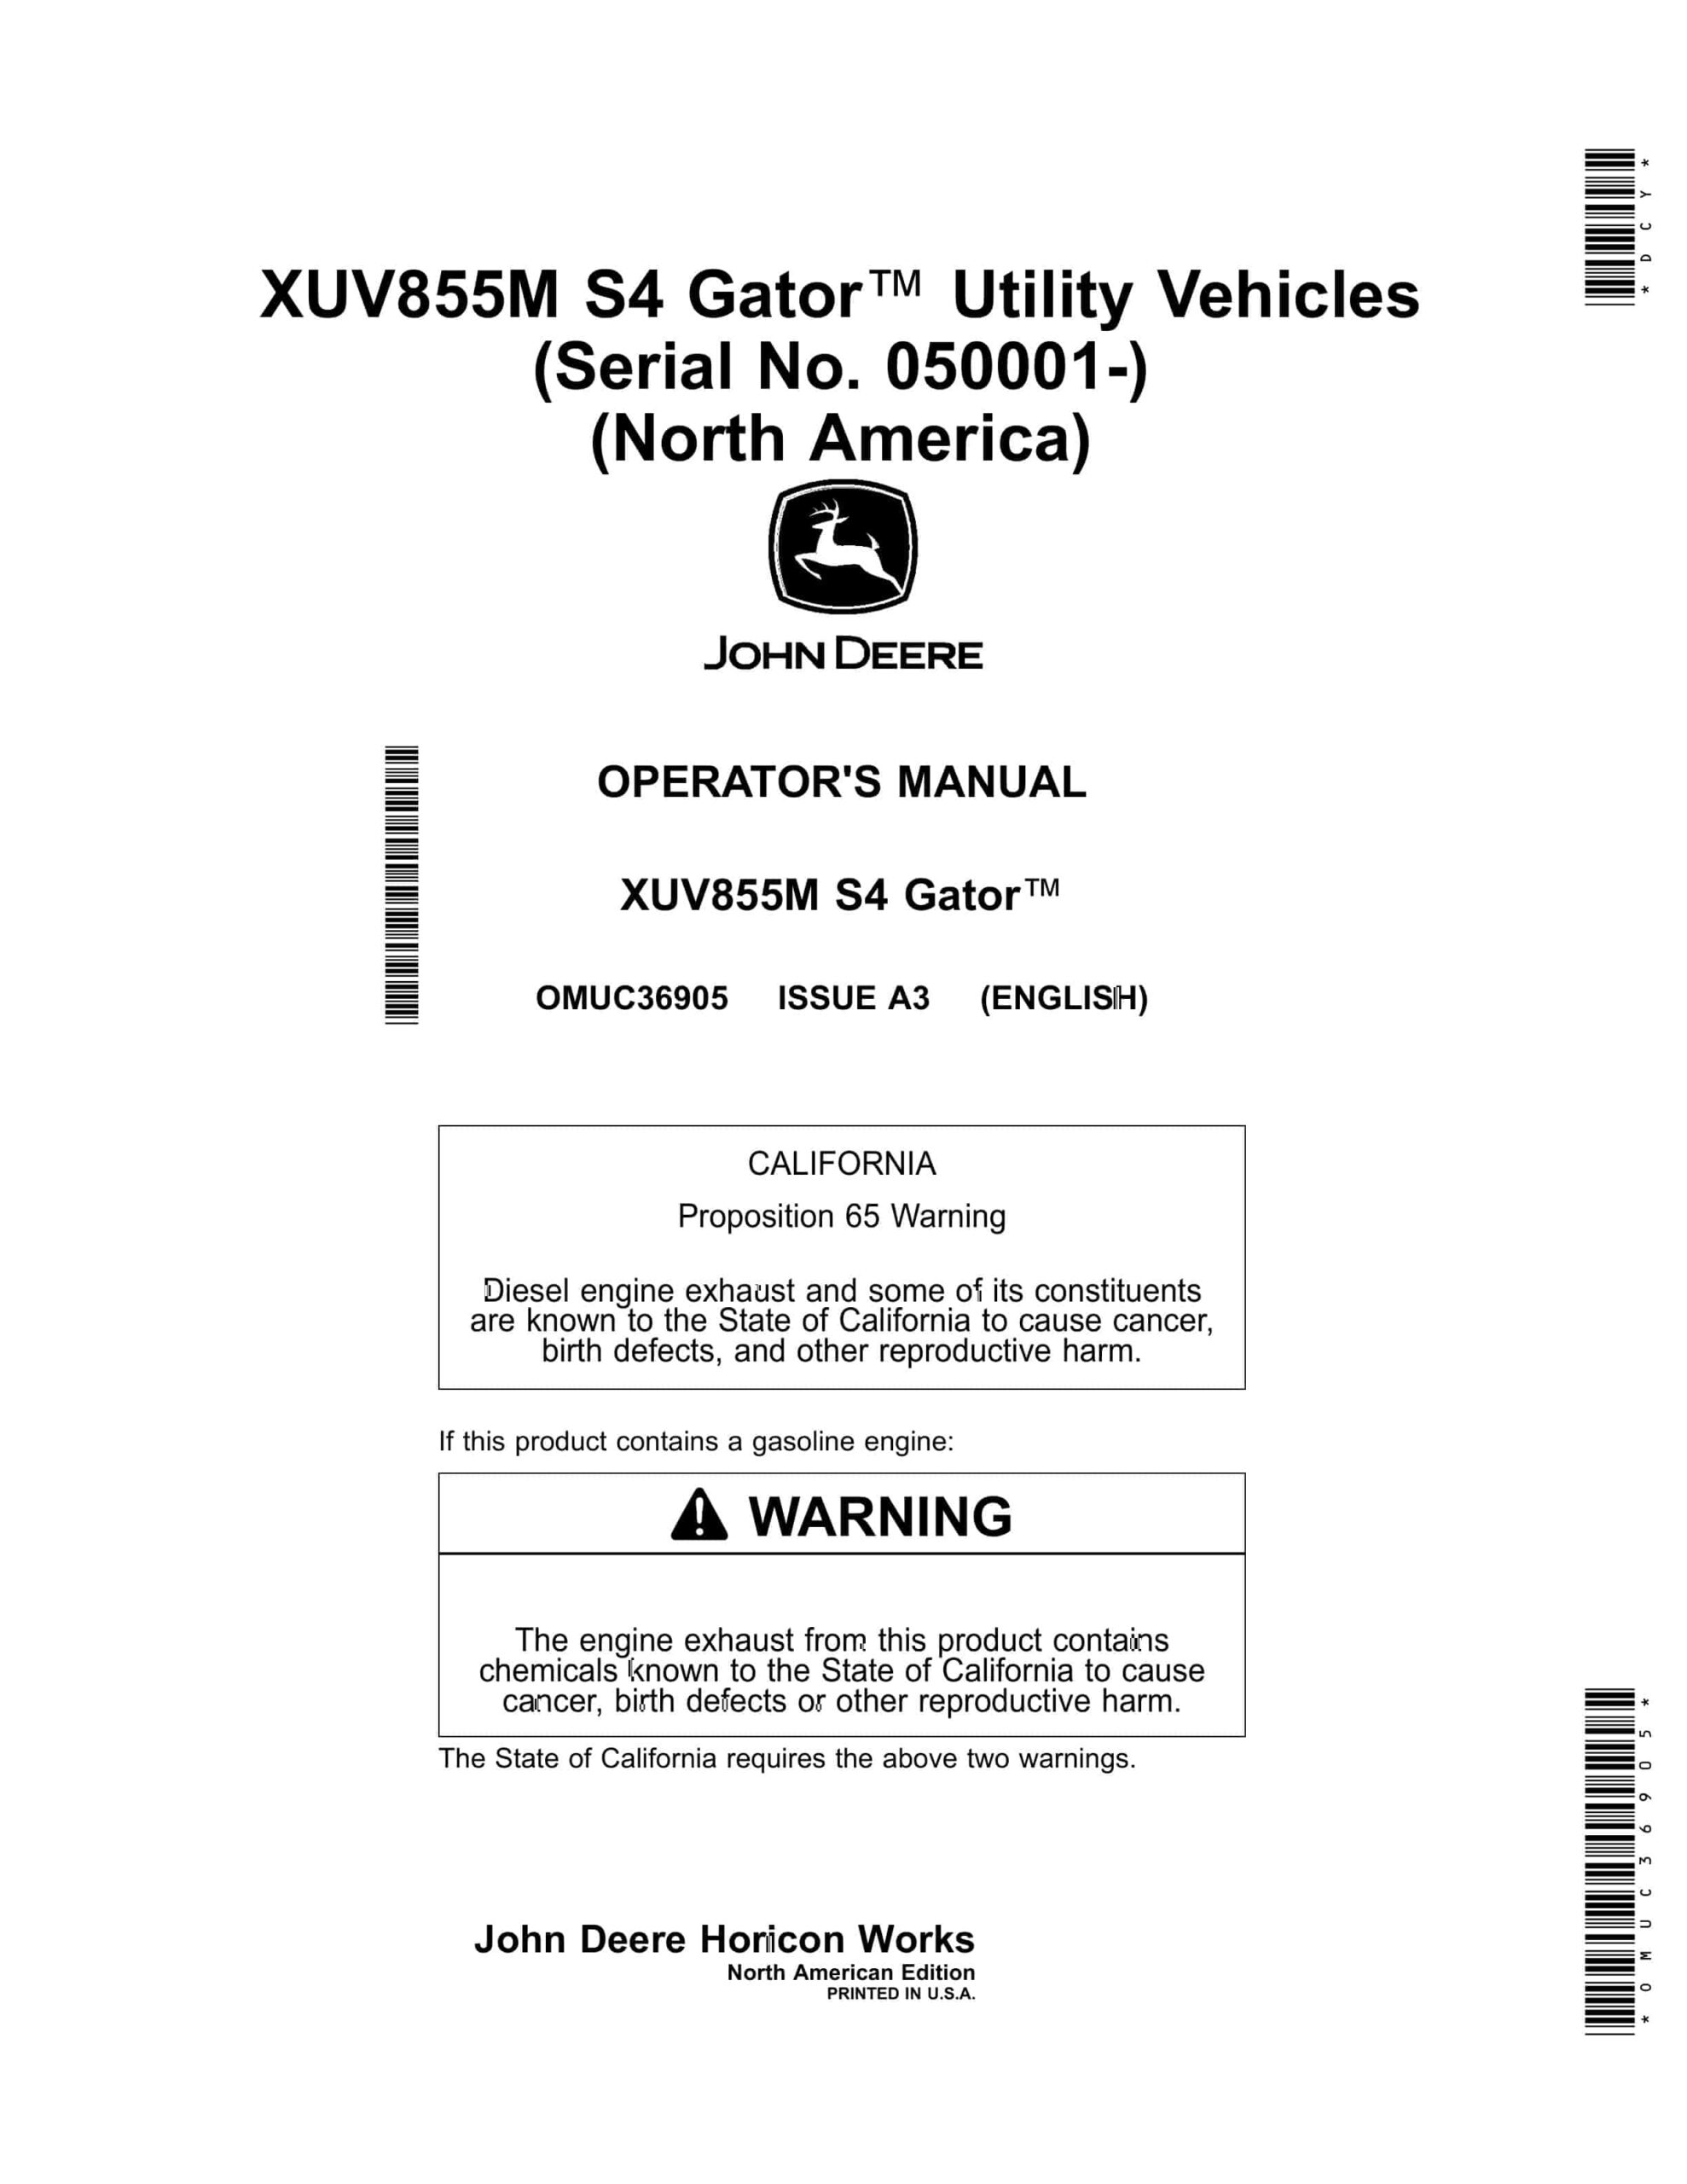 John Deere XUV855M S4 Gator Utility Vehicles Operator Manual OMUC36905-1